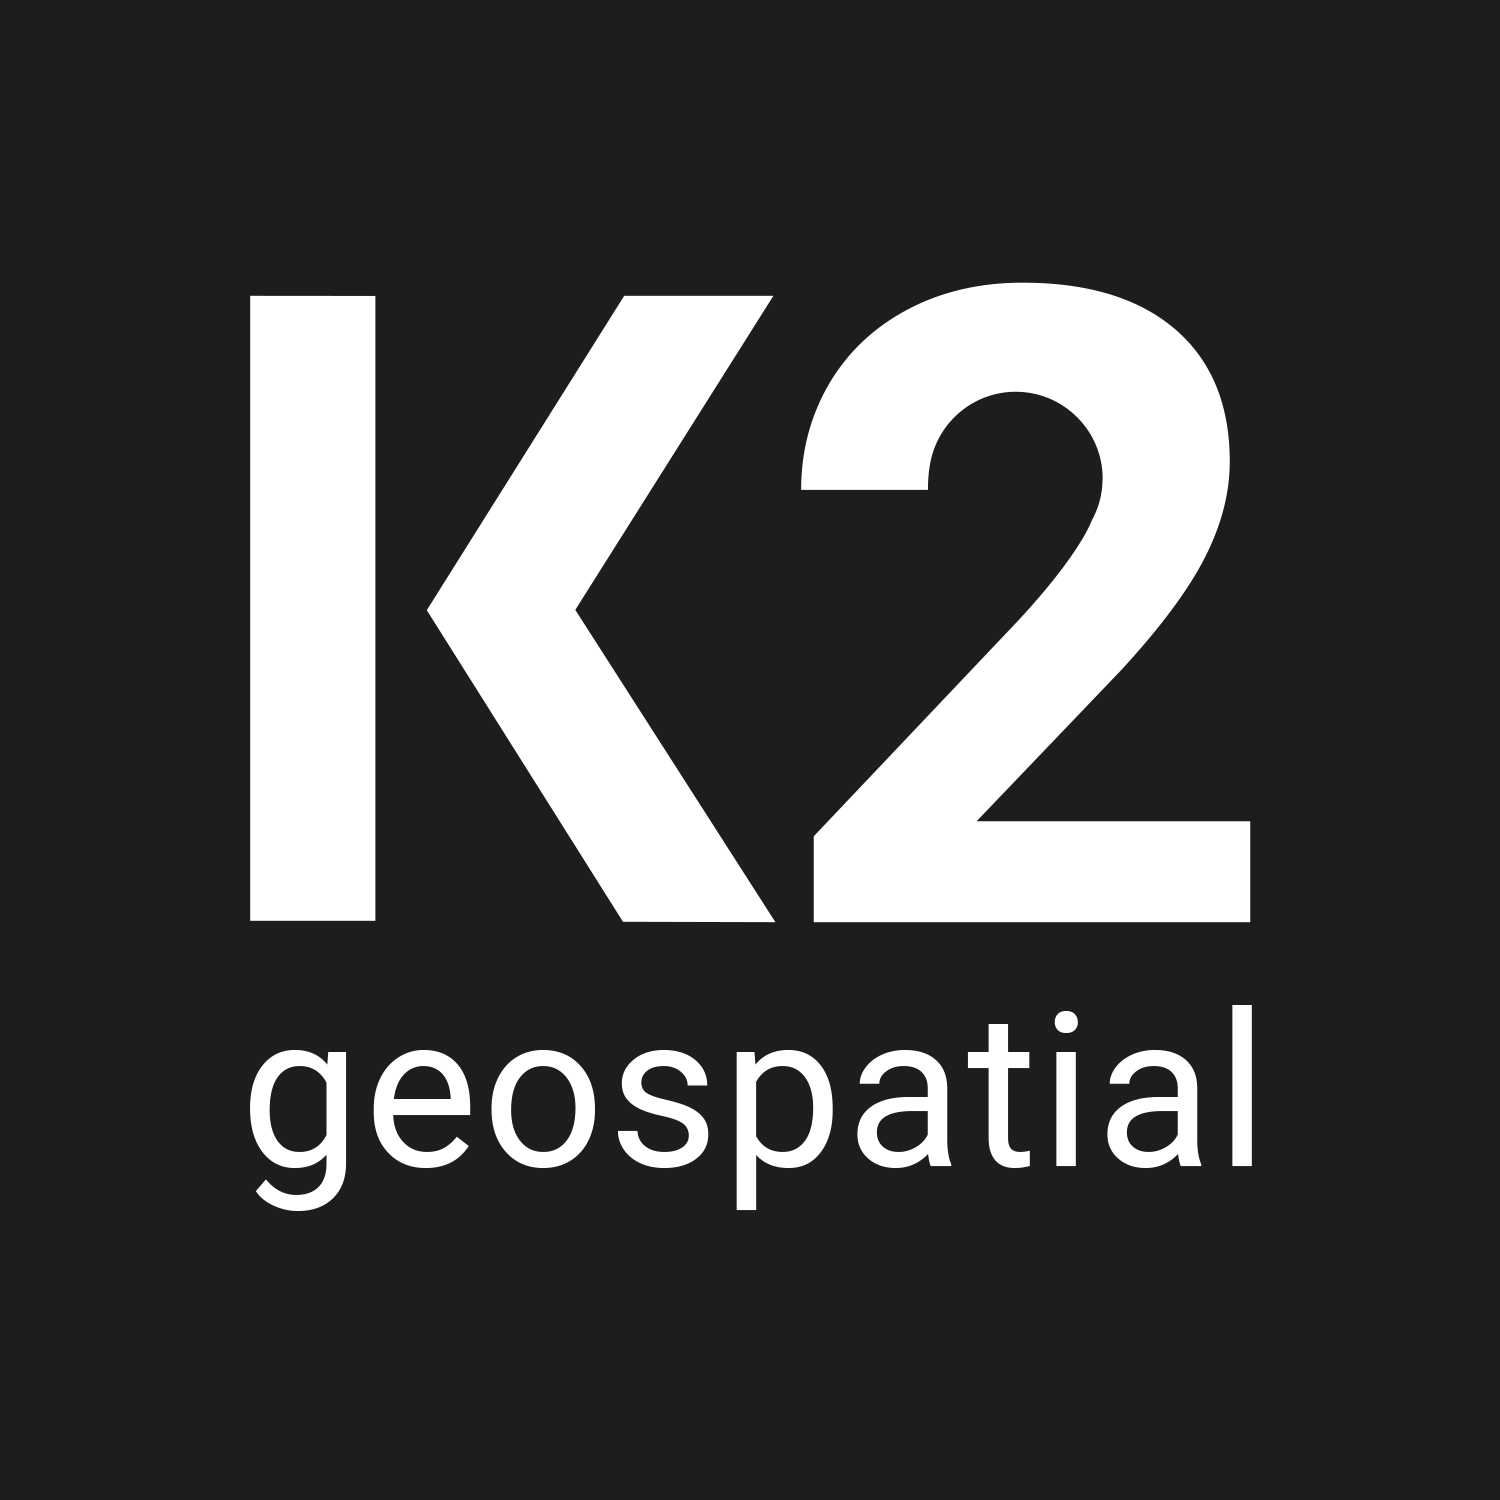 K2 Geospatial